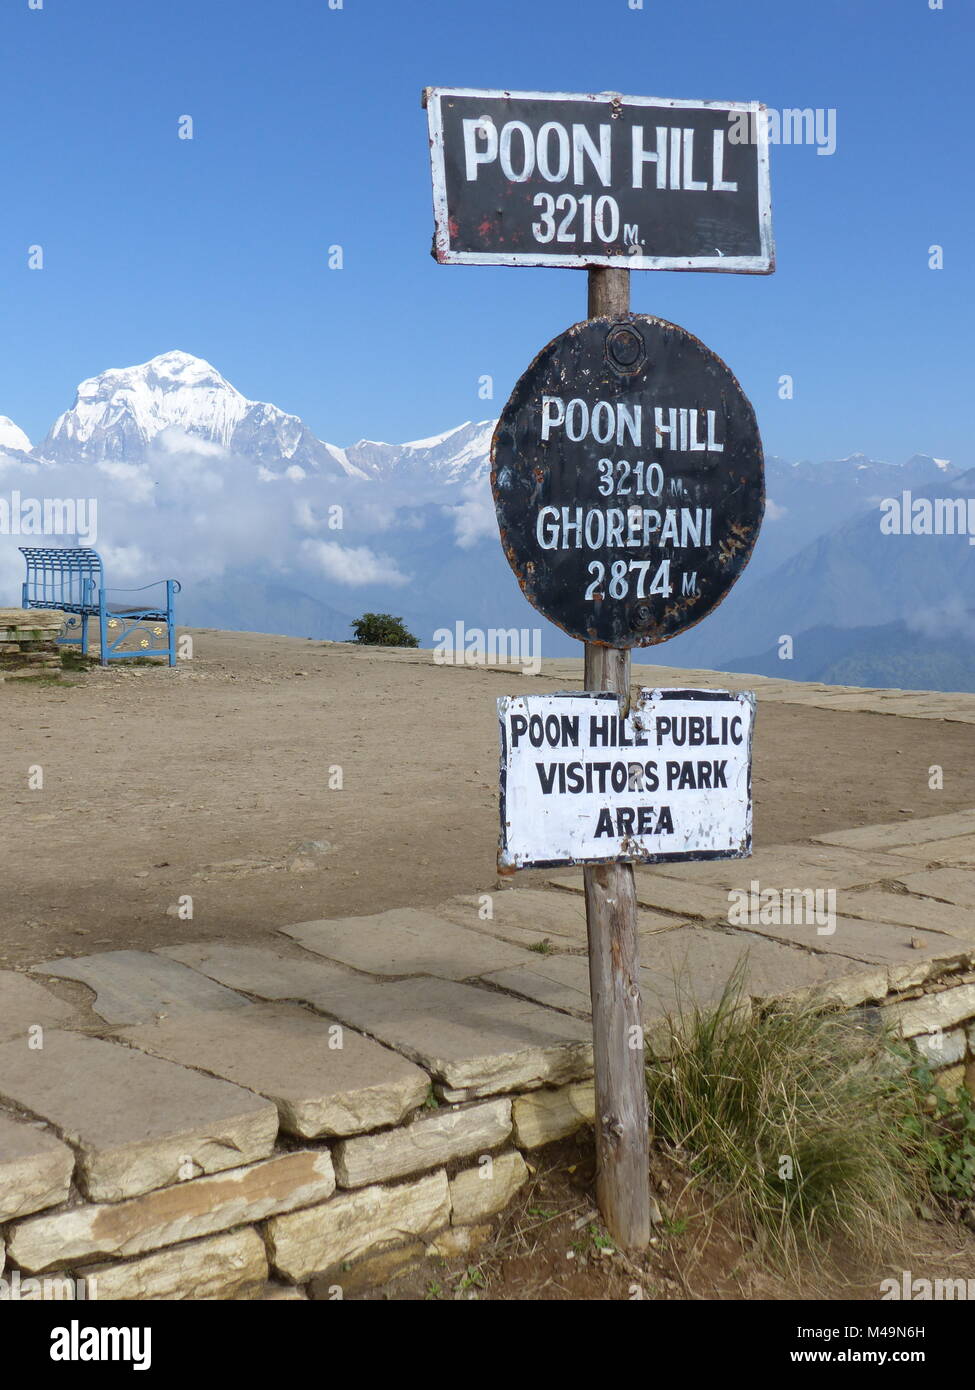 Ghorepani Poon Hill segno, Dhaulagiri gamma da Poon Hill - uno dei più visitati himalayana punti di vista in Nepal, in vista di Snow capped Himalaya, Anna Foto Stock